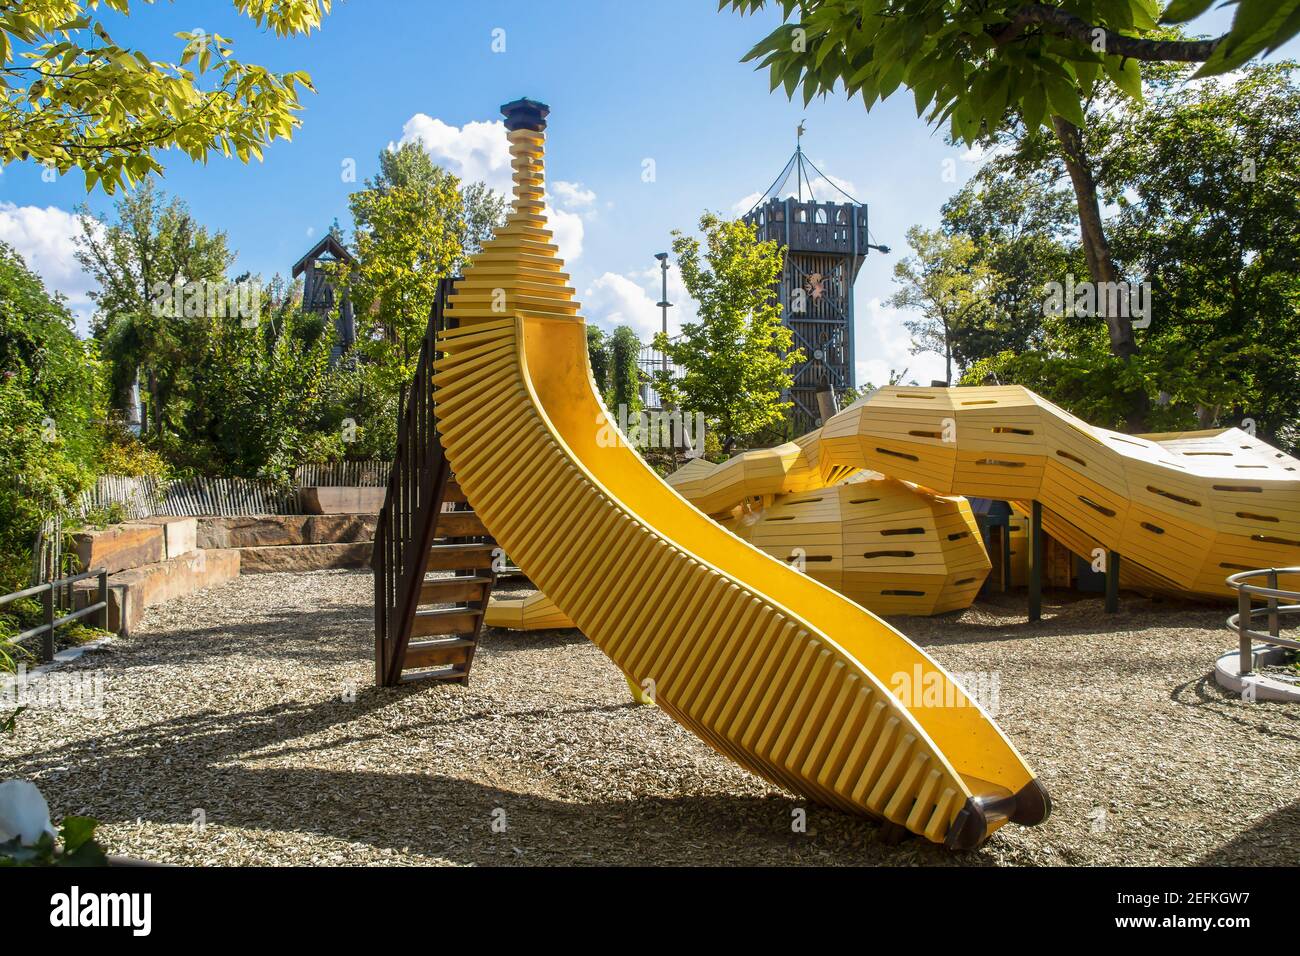 8-18 - 2019 Tulsa USA - The Gathering Place - Award winning public theme park in Oklahoma - Yellow banana shaped slide and snake climbing tunnel with Stock Photo